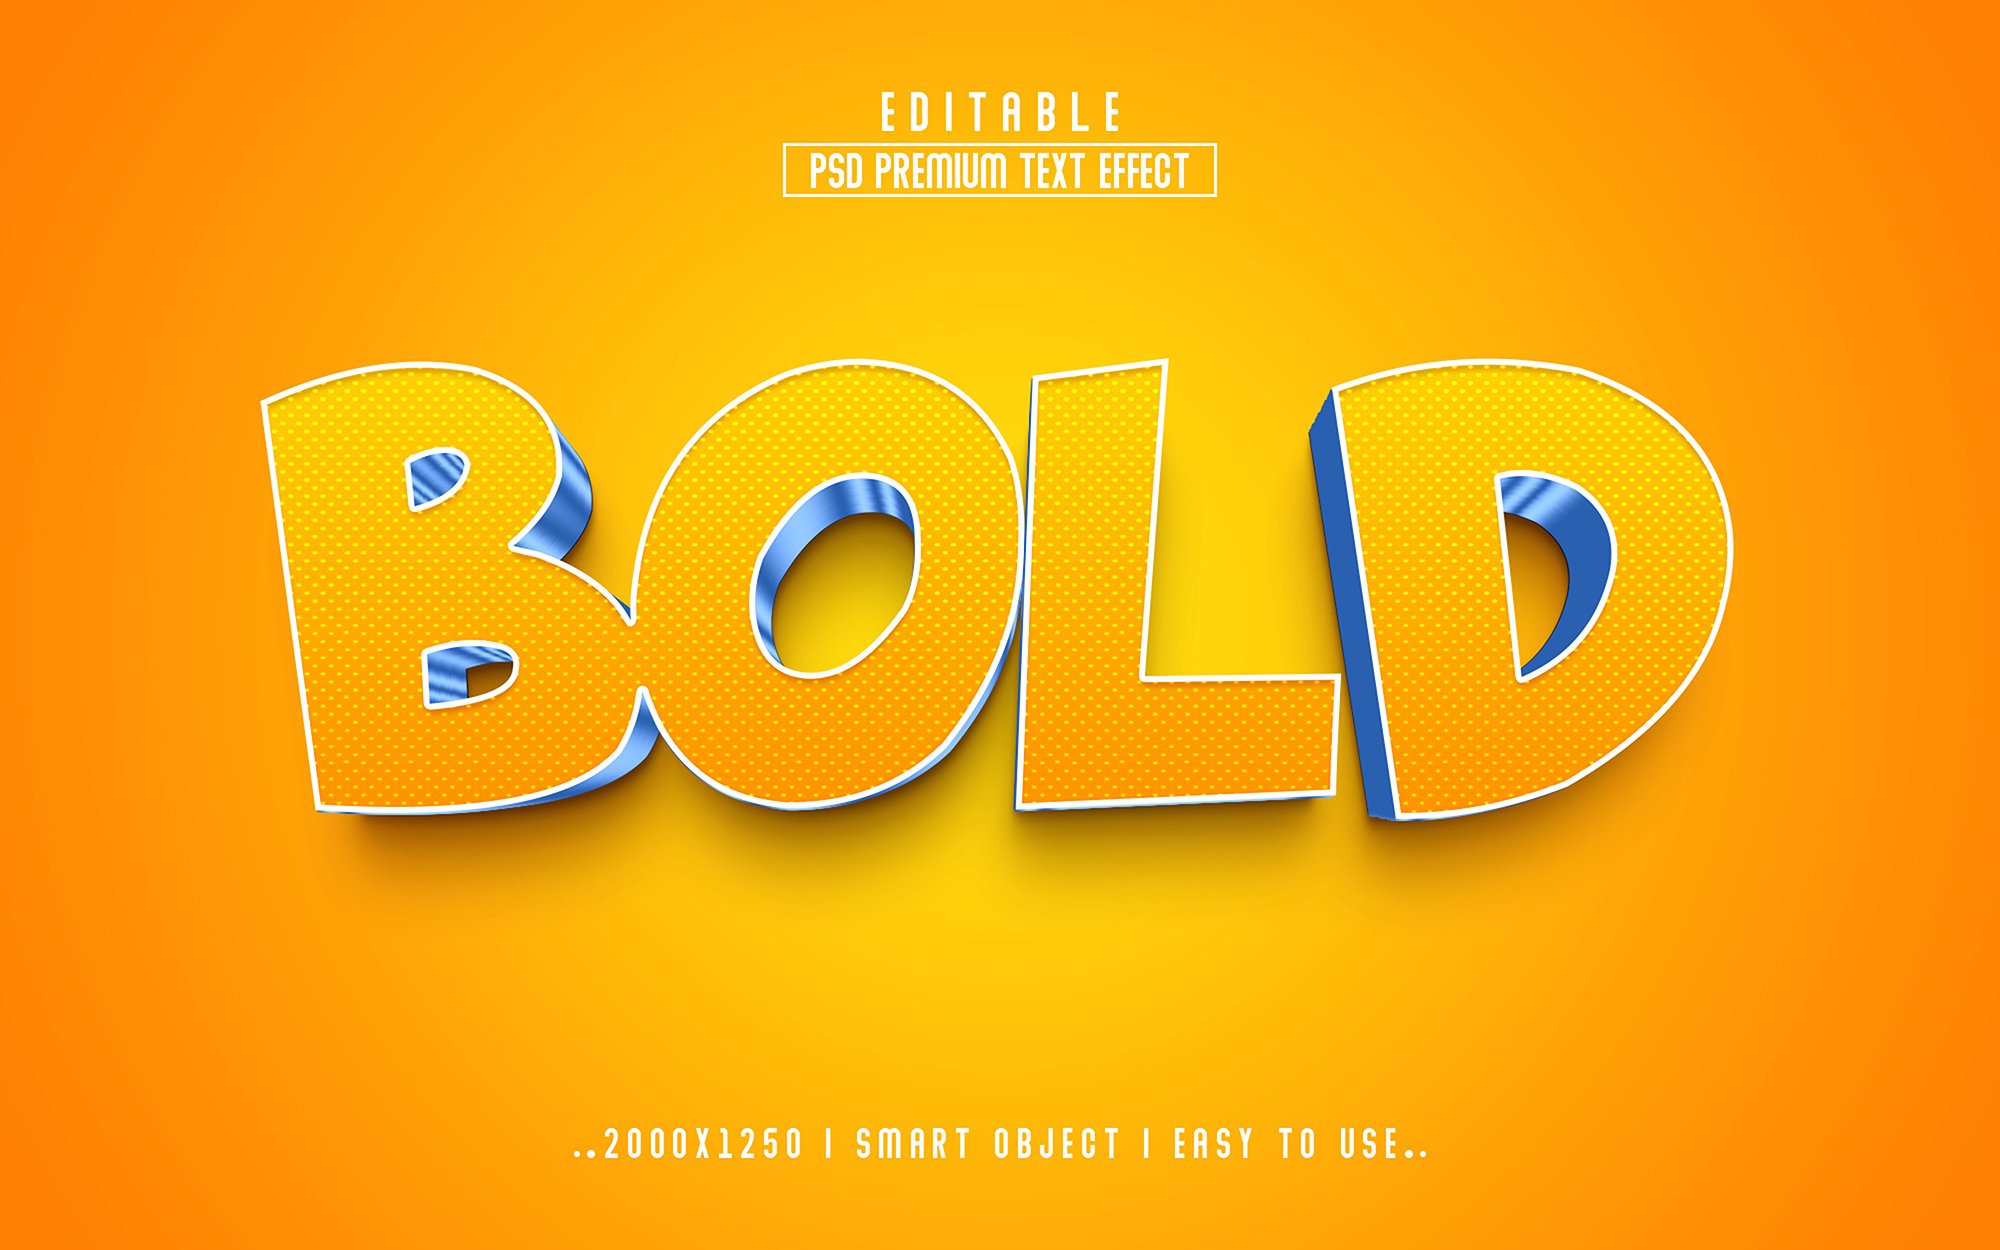 Bold 3D Editable psd Text Effectcover image.